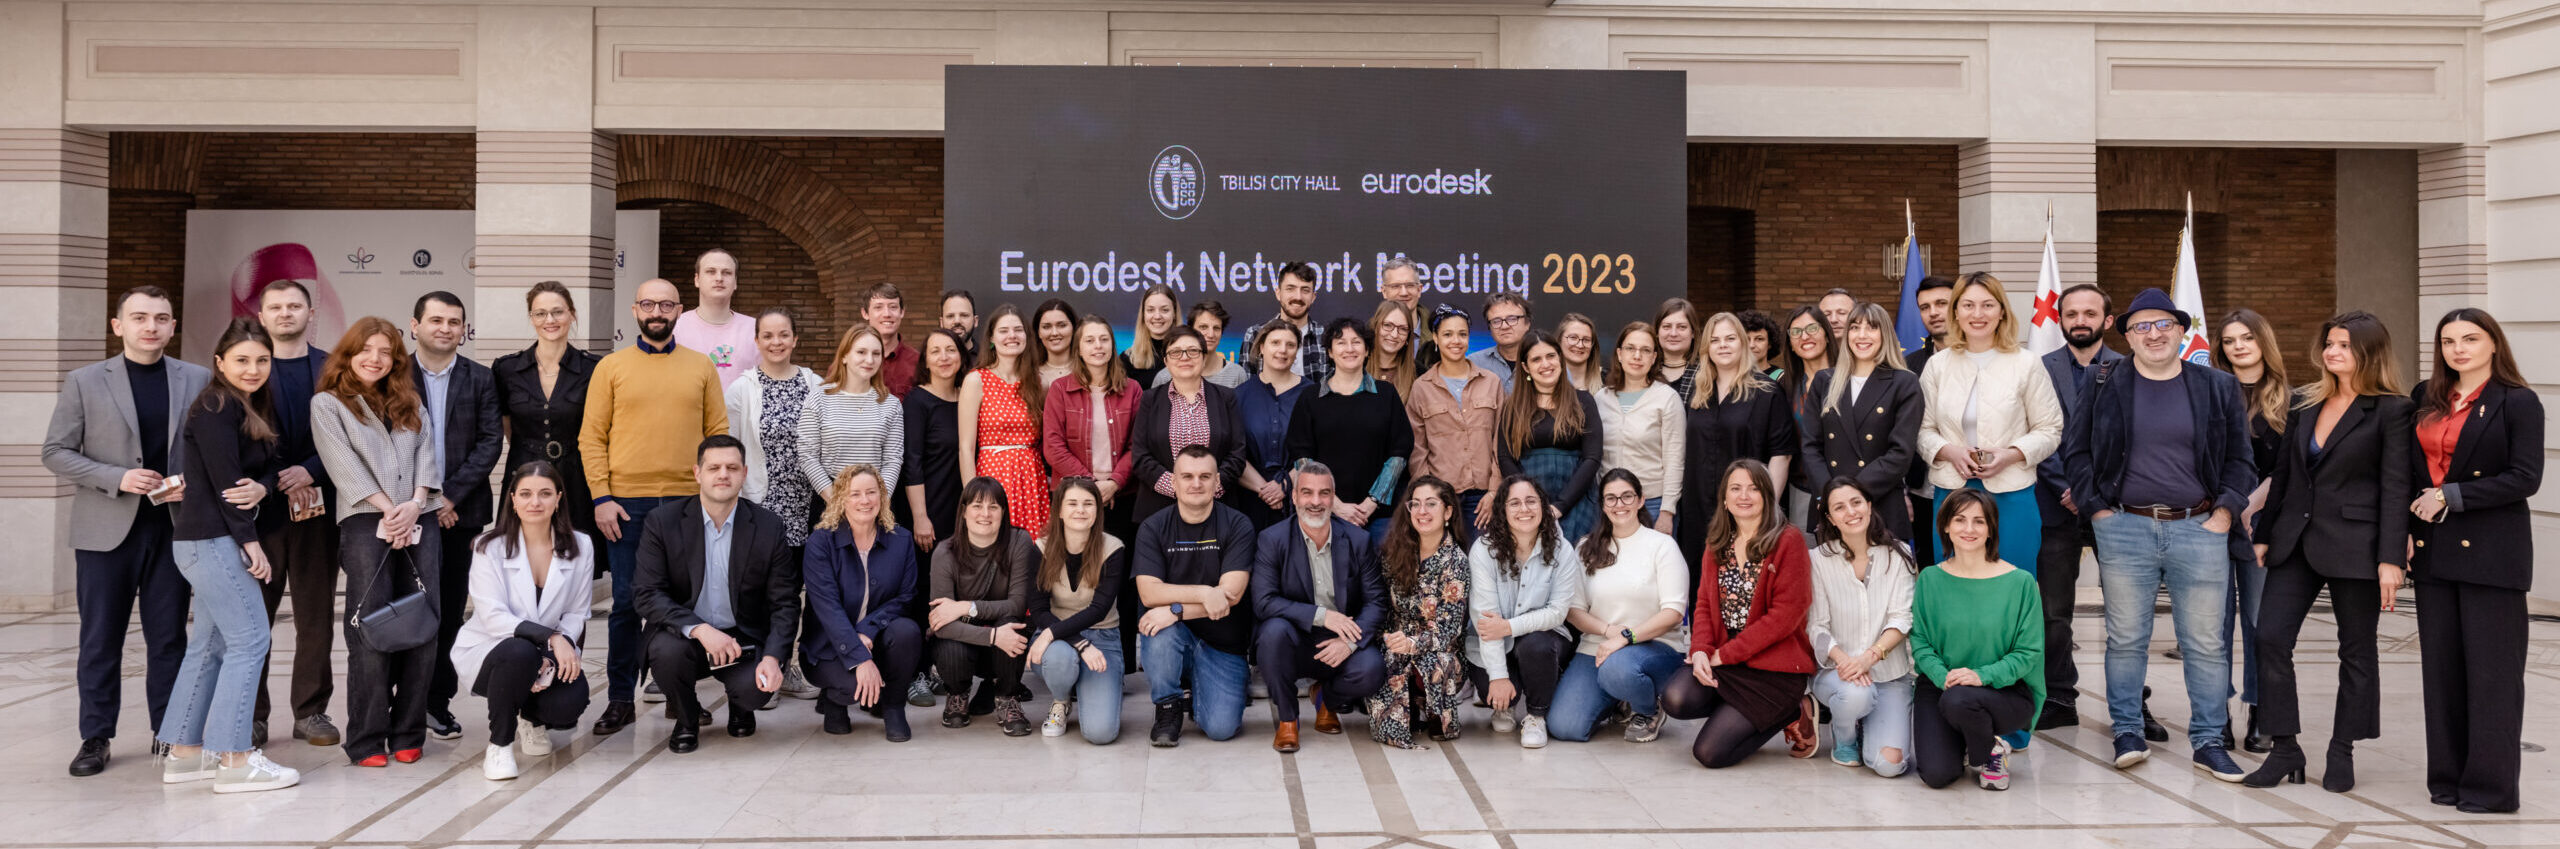 eurodesk-network-georgia-meeting